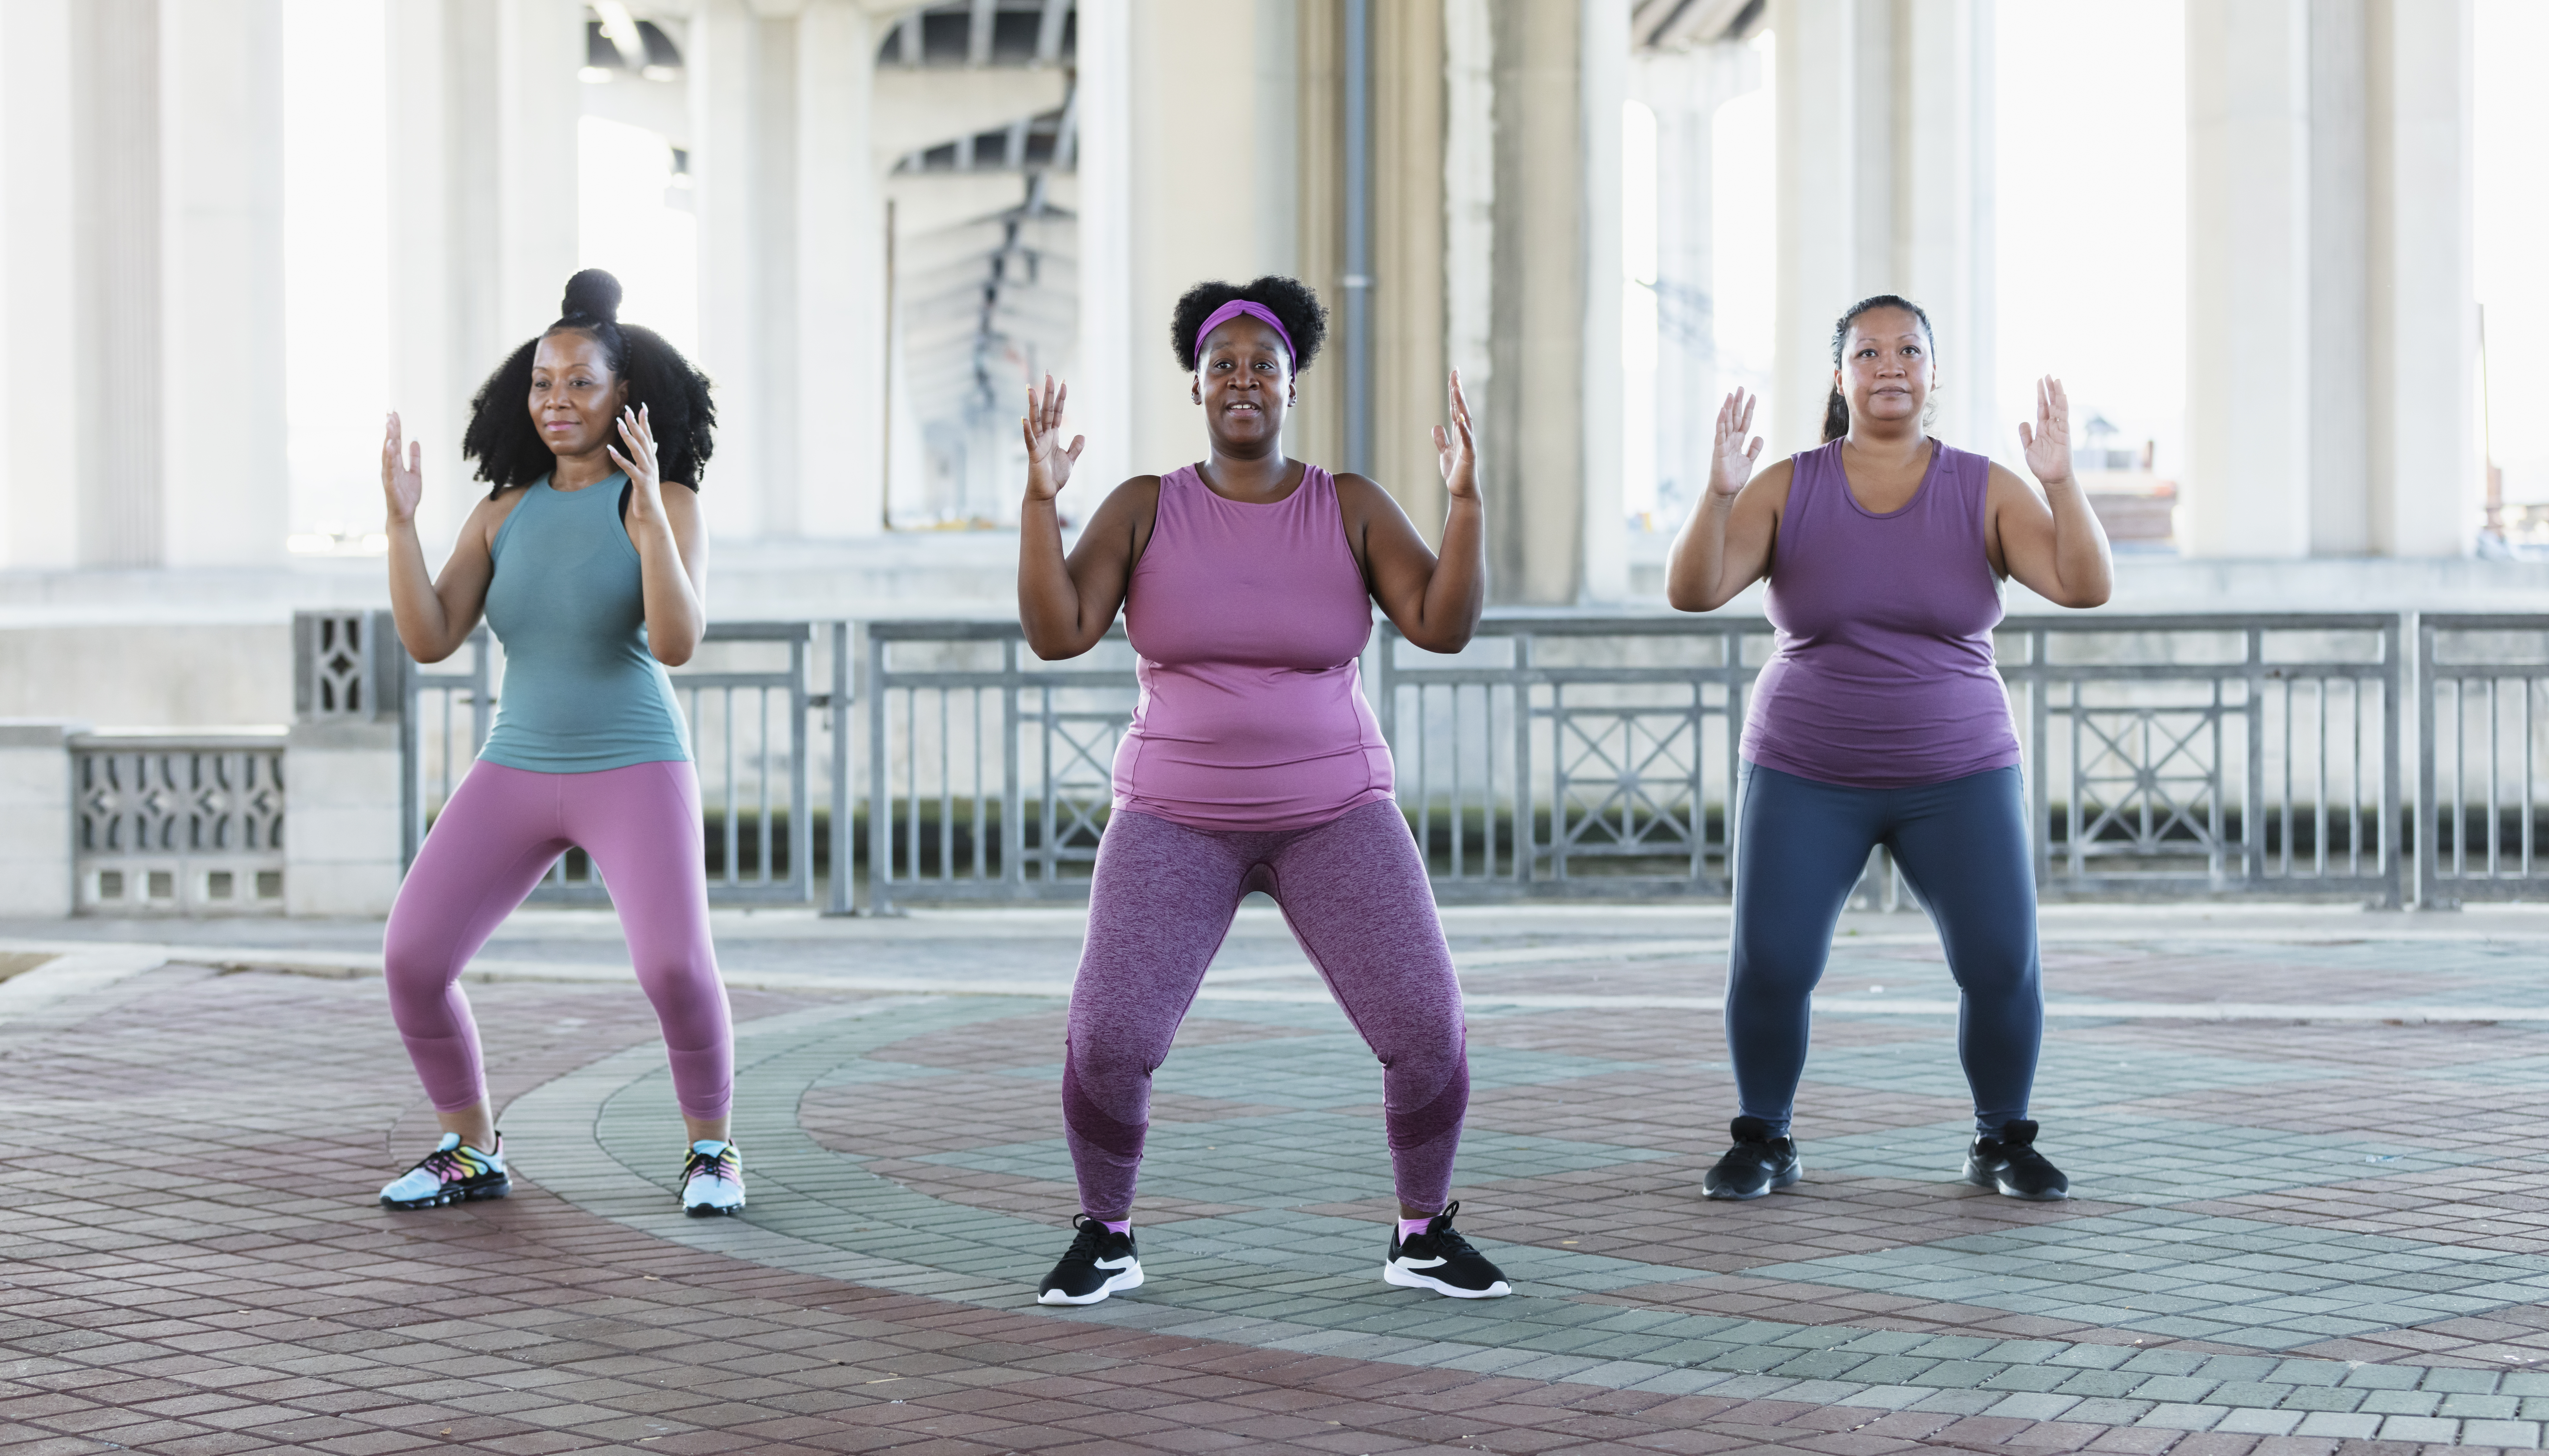 North Carolina A&T Introduces Plus-Sized Majorette Dance Team ‘Liquid Gold’ To Foster Inclusivity